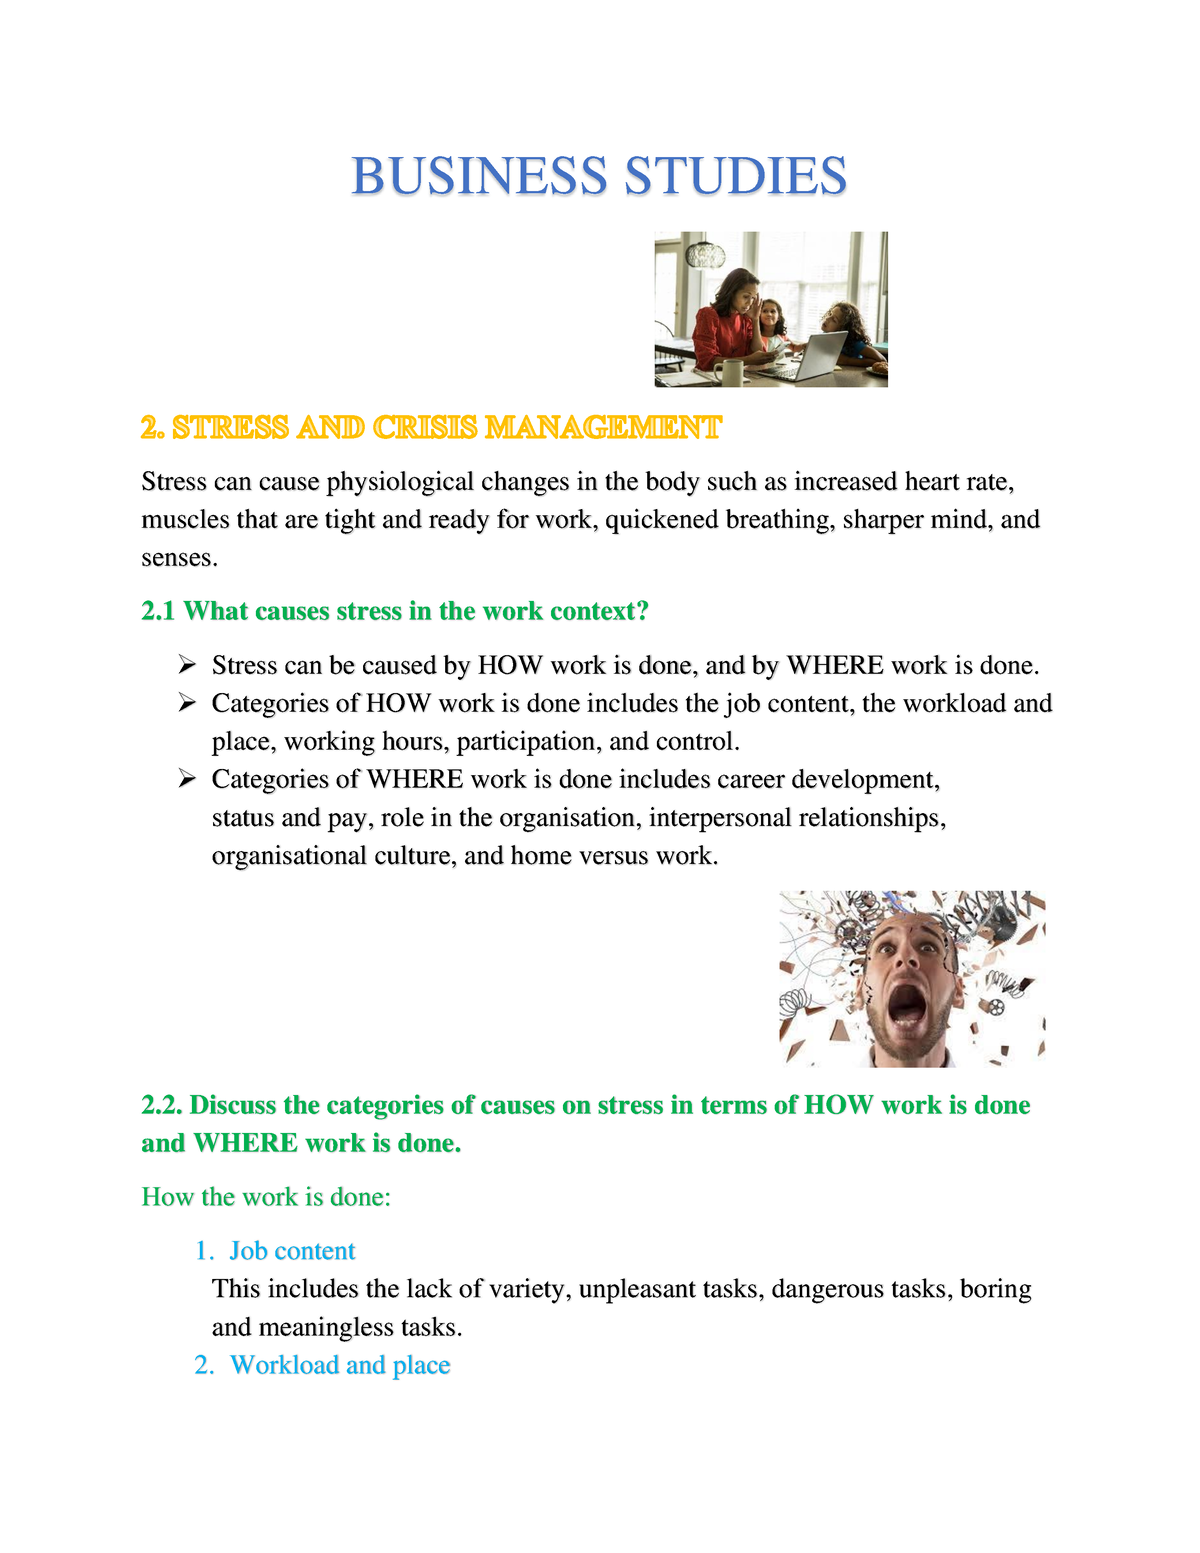 stress and crisis management essay grade 11